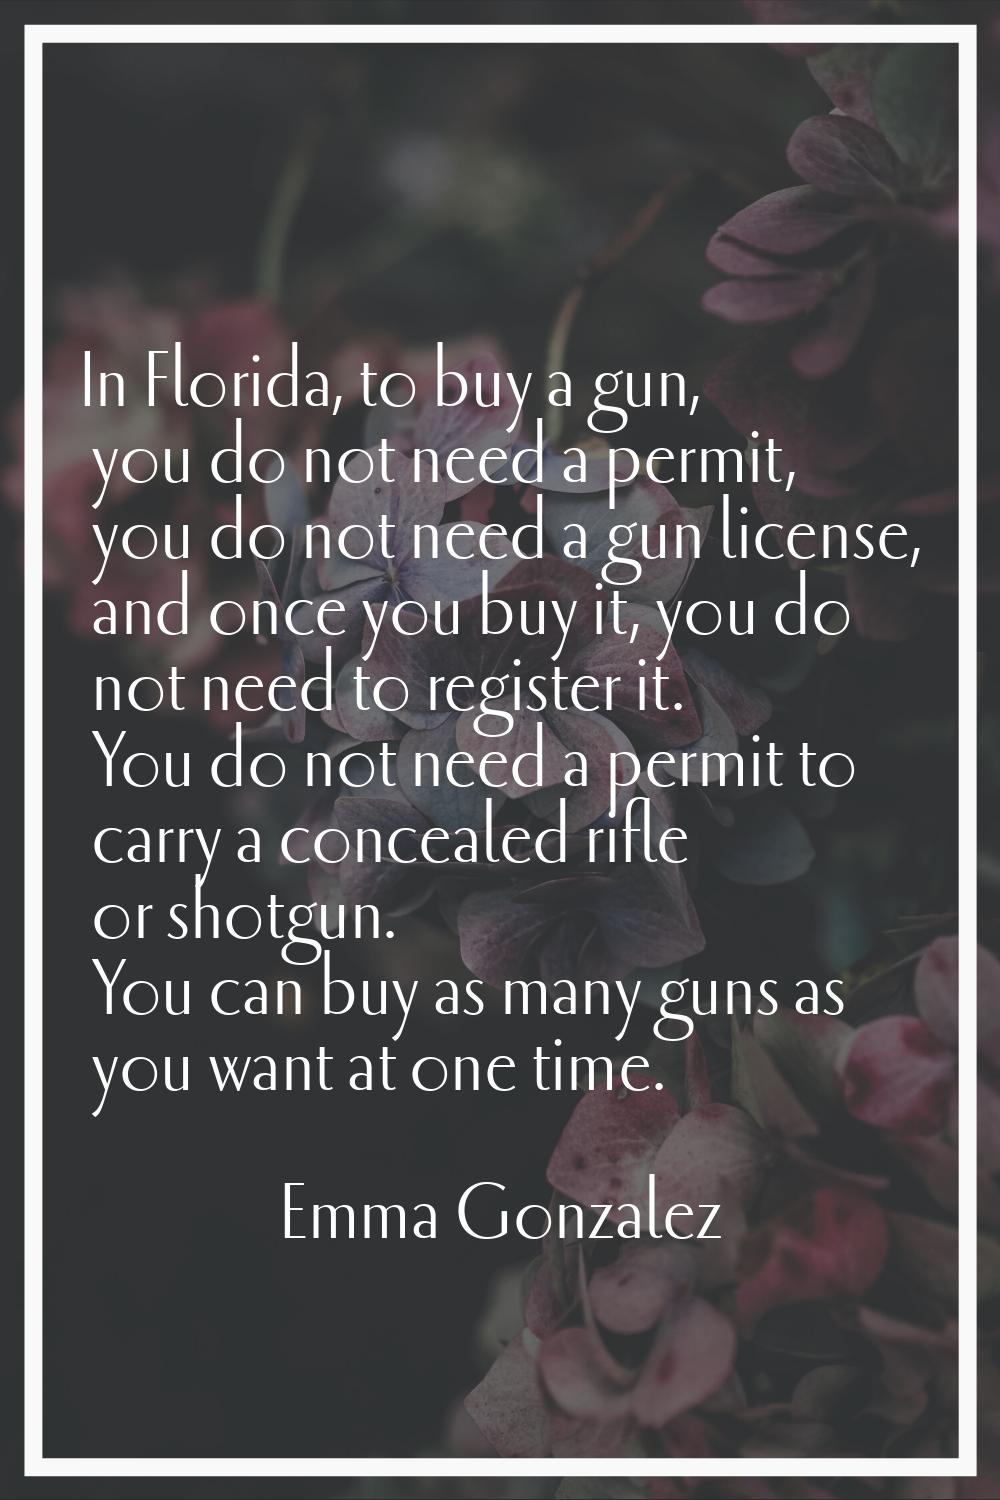 In Florida, to buy a gun, you do not need a permit, you do not need a gun license, and once you buy